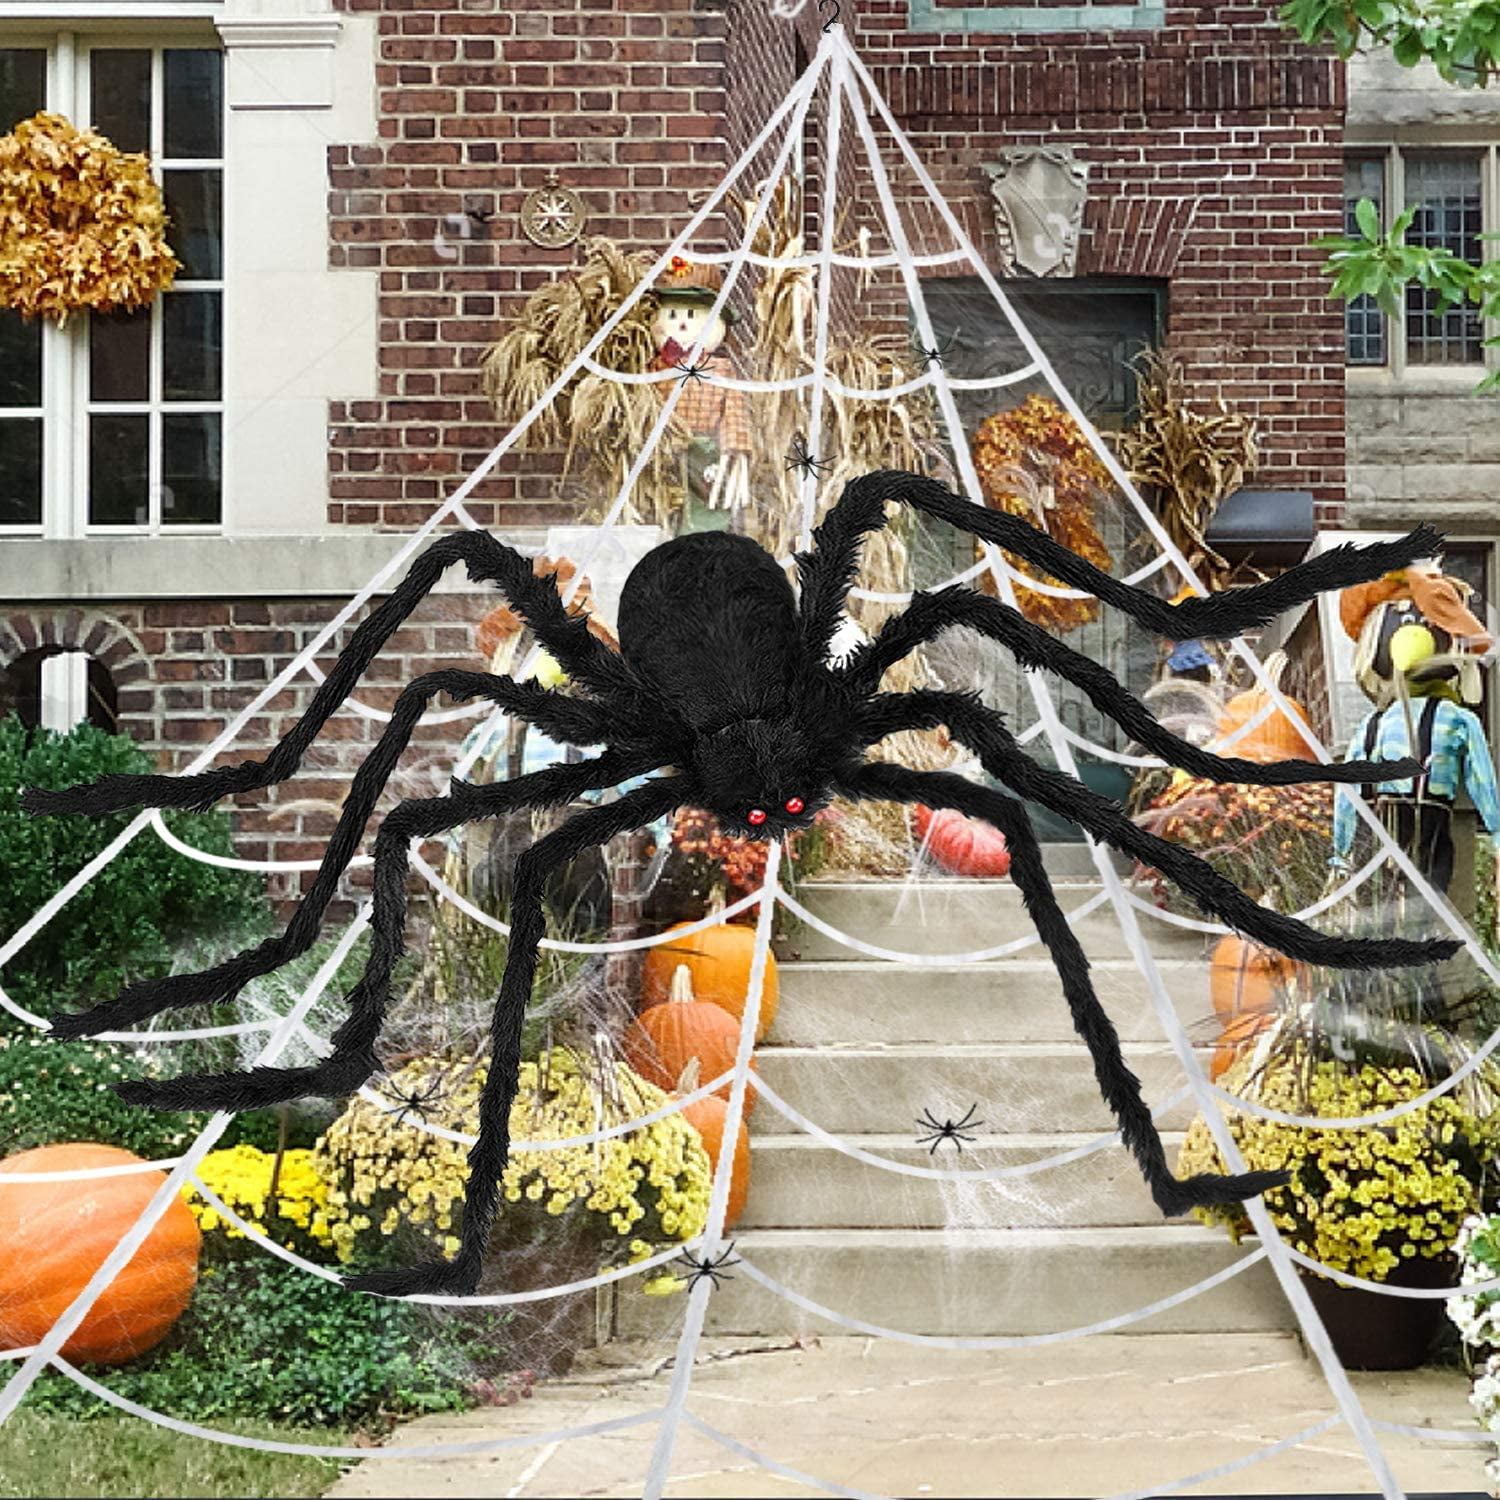 Rtudan Halloween Decoration Giant Spider Web Set with Stretch Cobweb 2 Small Fake Spiders Triangular Mega Outdoor Decor Yard Lawn Decor,23Ft